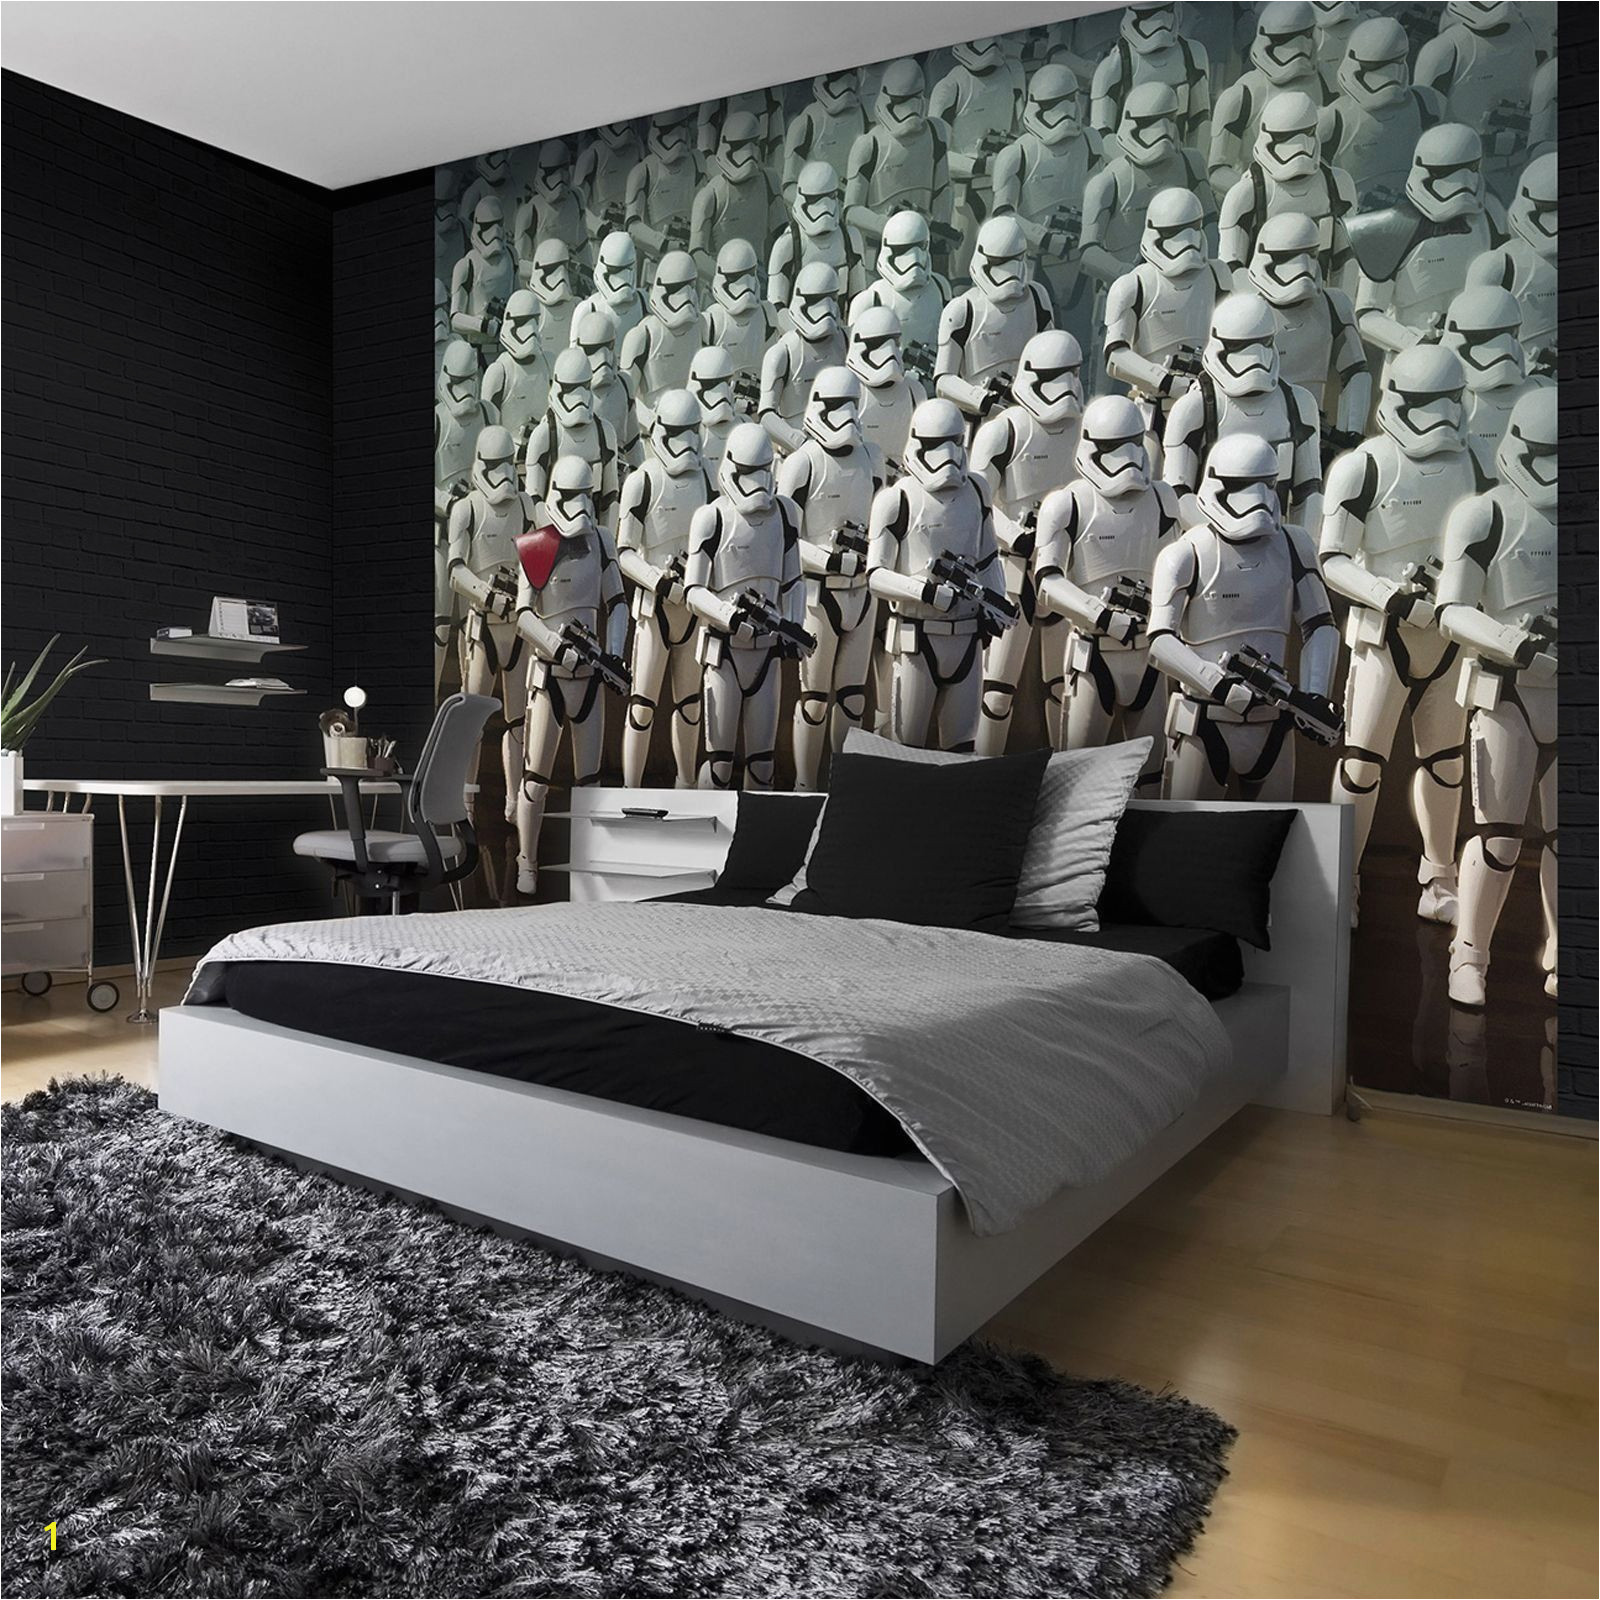 Star Wars Stormtrooper Wall Mural dream bedroom …